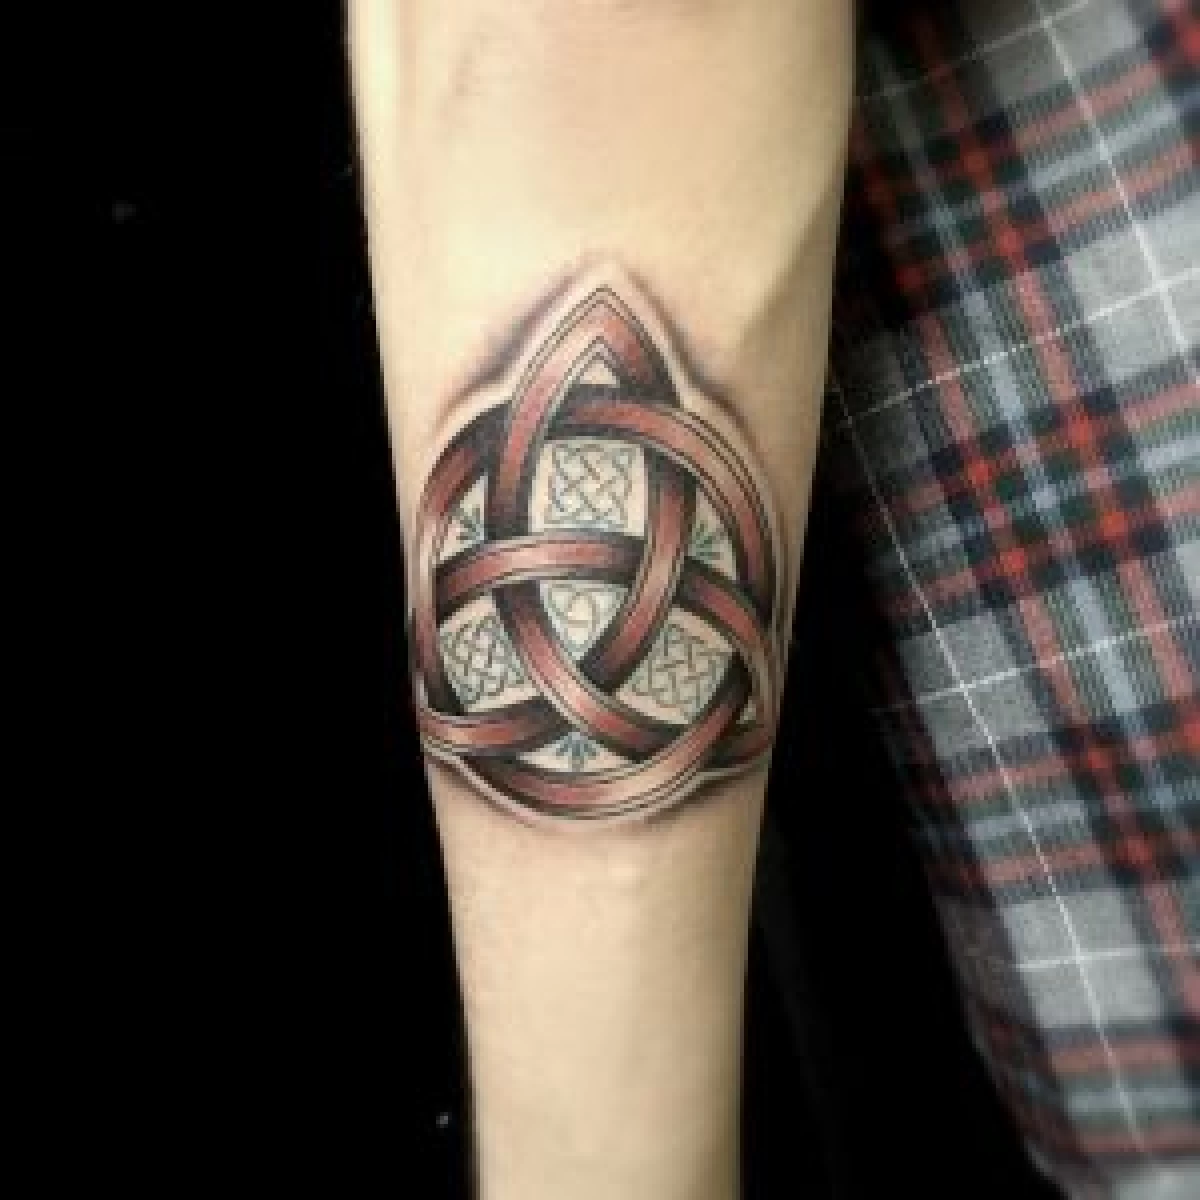 celtic cross with irish flag tattoo